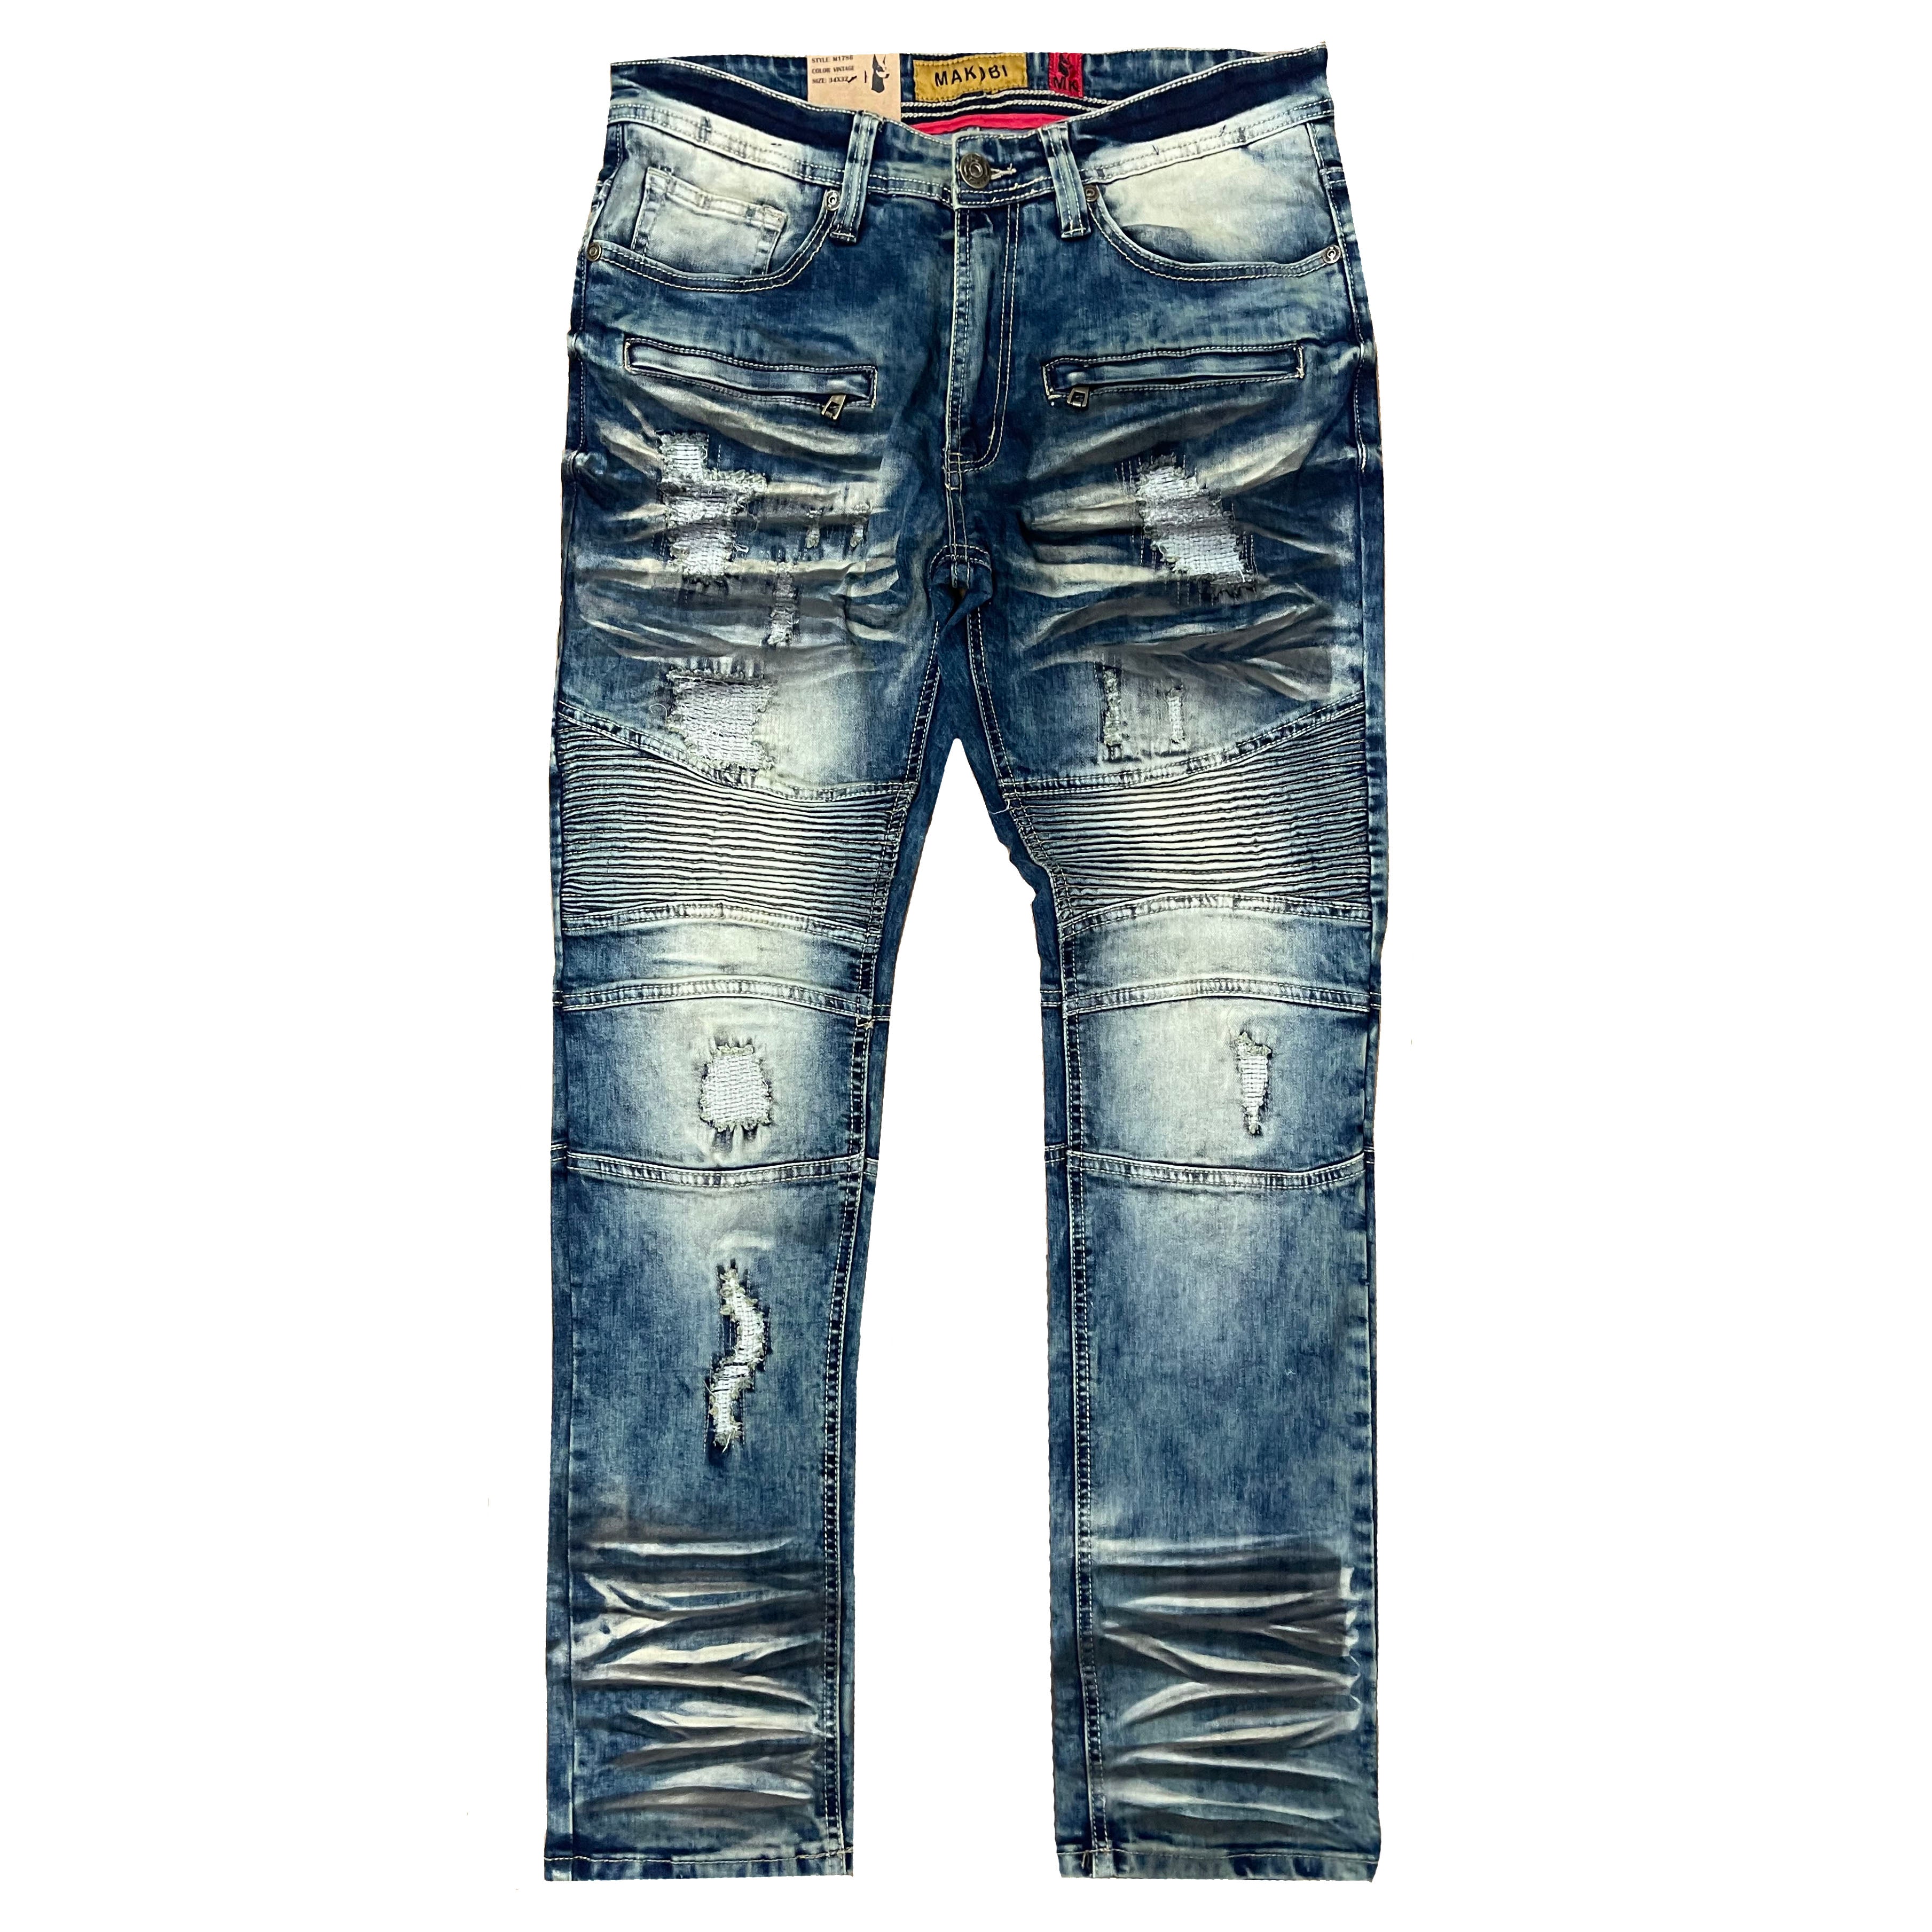 M1786 Makobi Prado Biker Jeans pẹlu Rip & Tunṣe - Vintage Wash (TUNTUN)